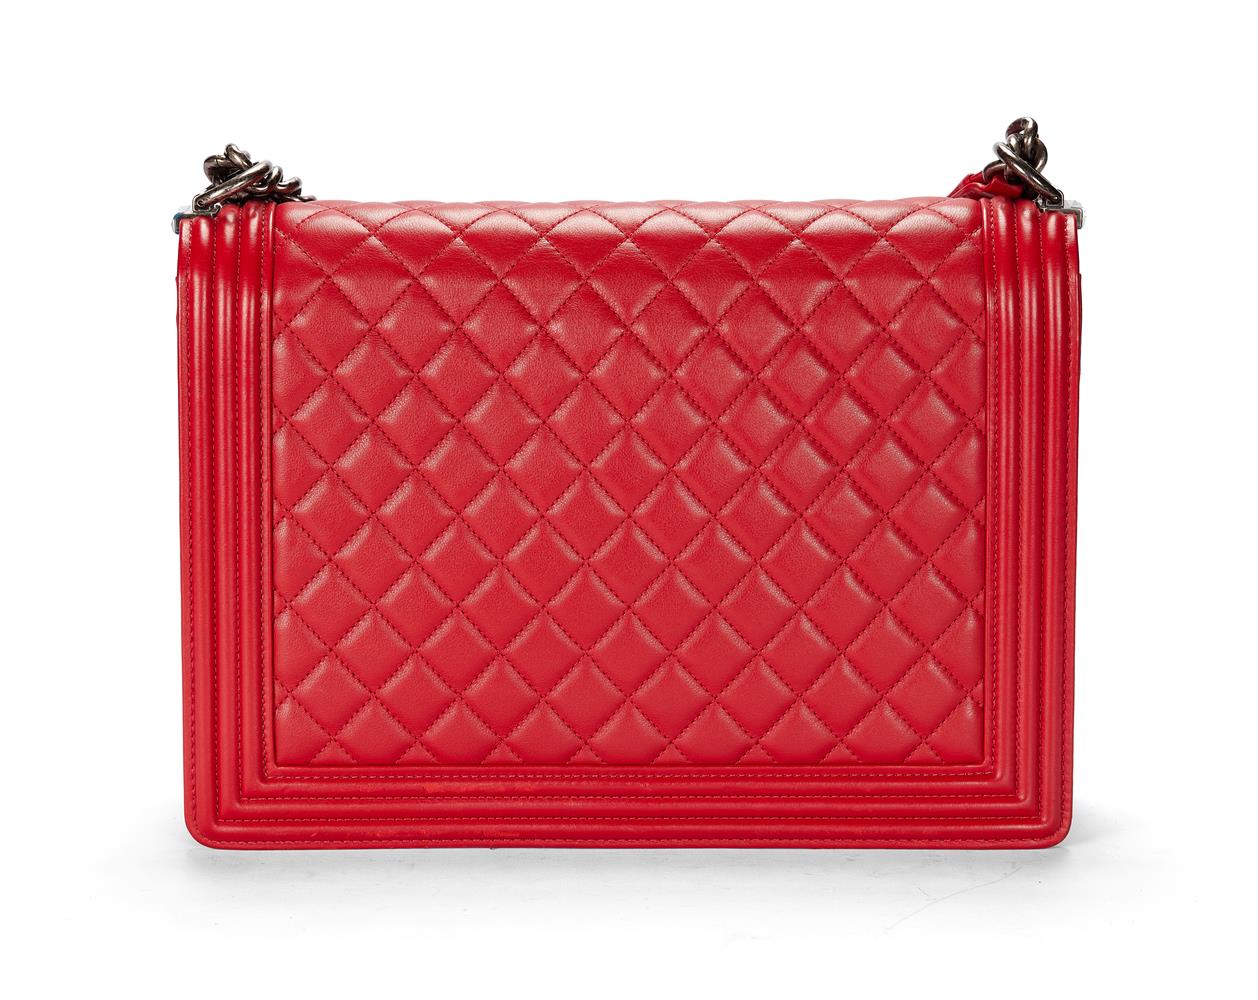 Chanel, Boy, a red calfskin quilted leather shoulder bag - Bild 2 aus 2